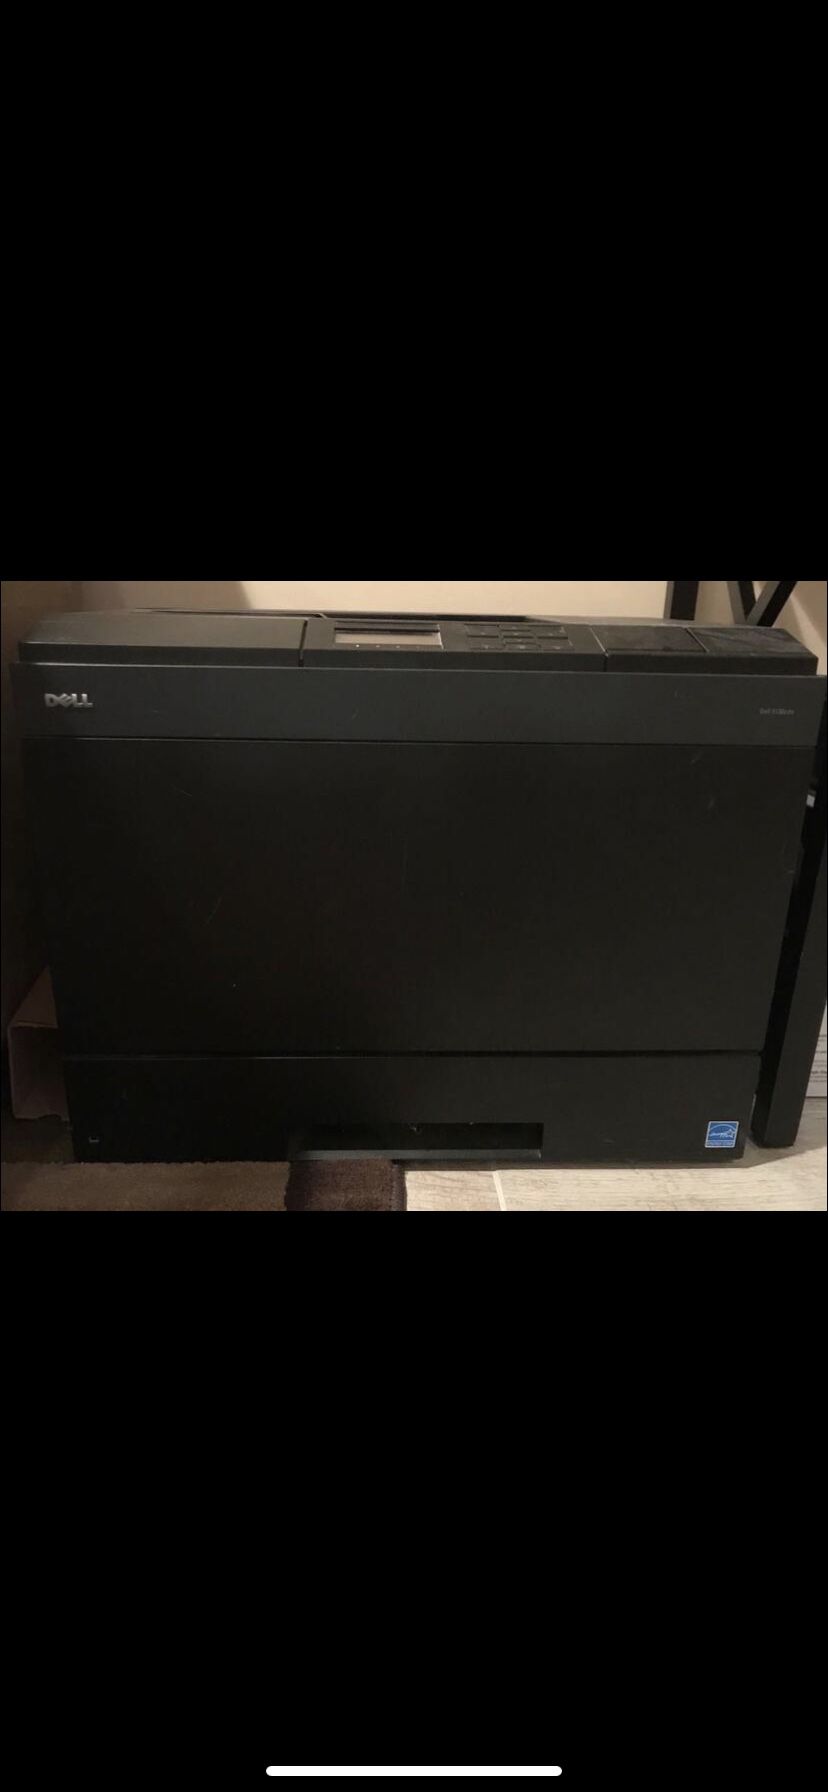 Dell5130cdn colour laser printer